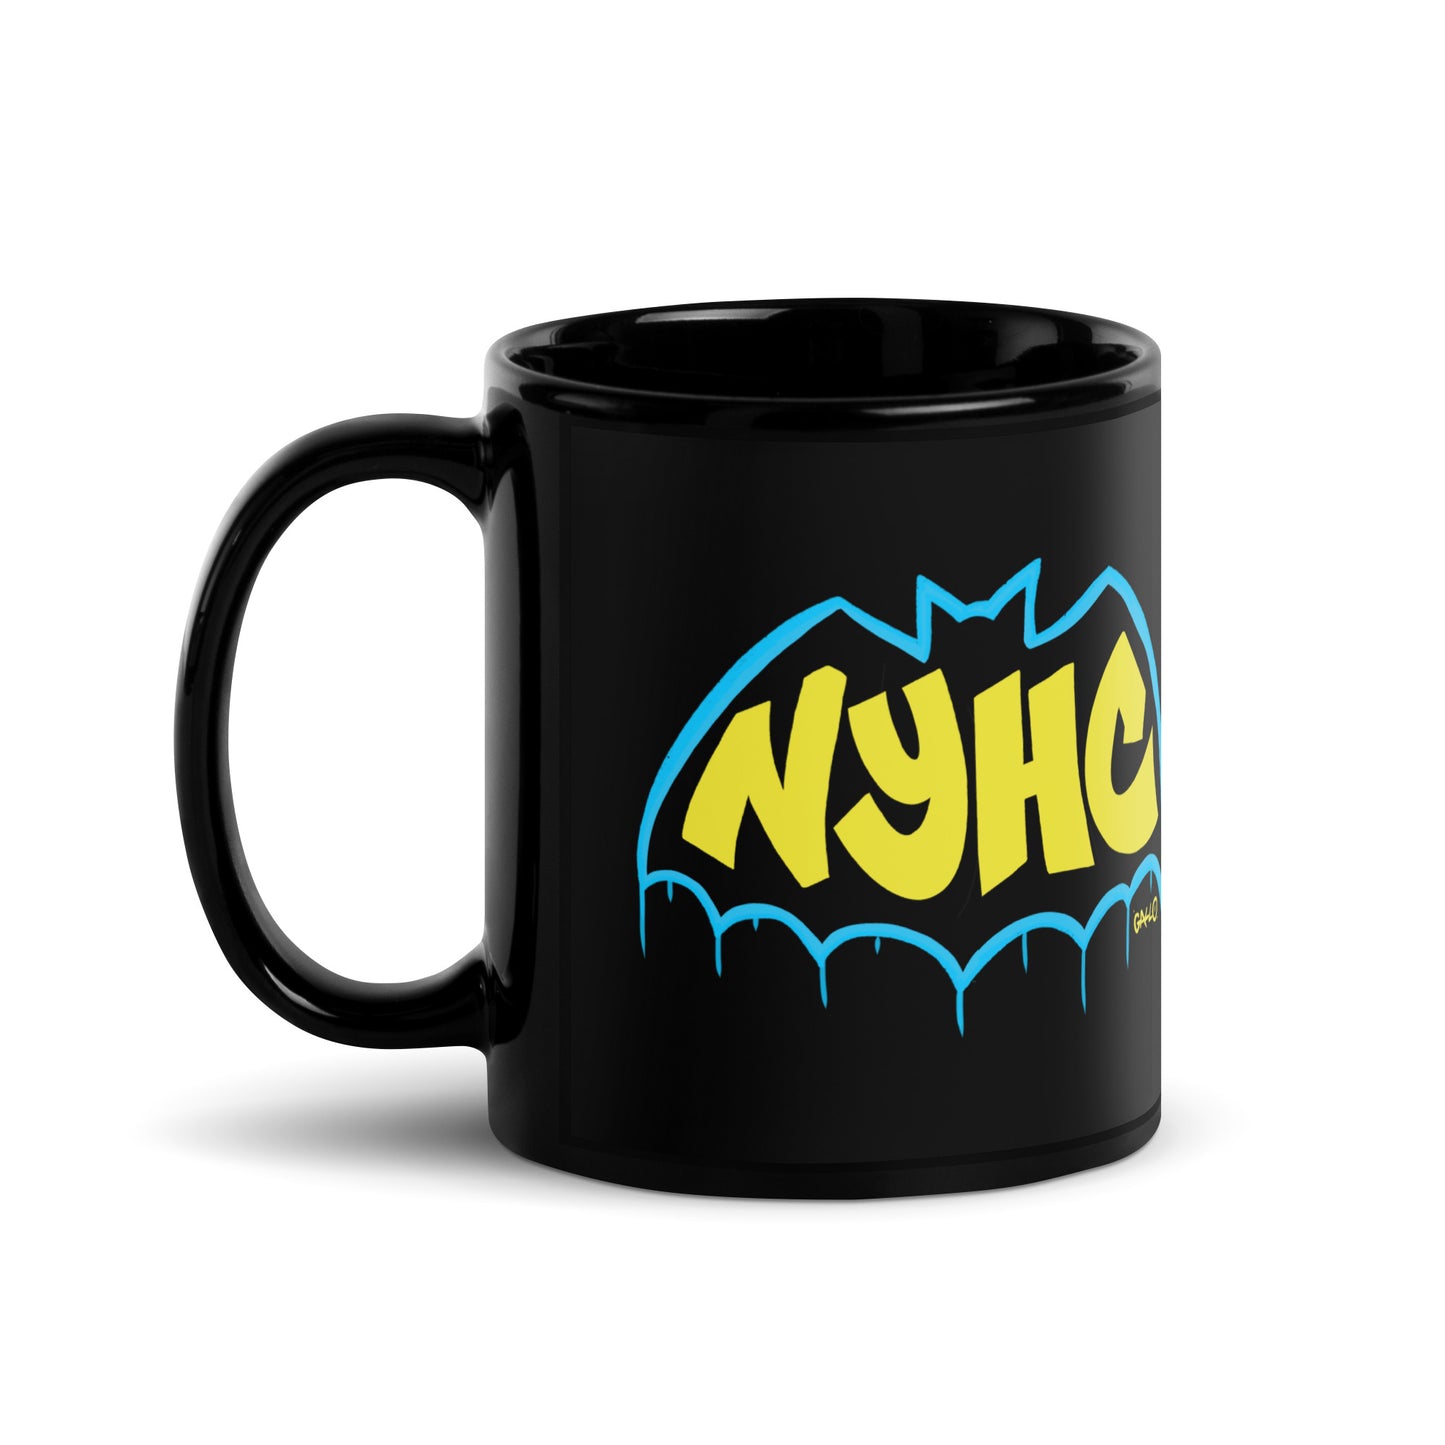 Gotham Black Glossy Mug